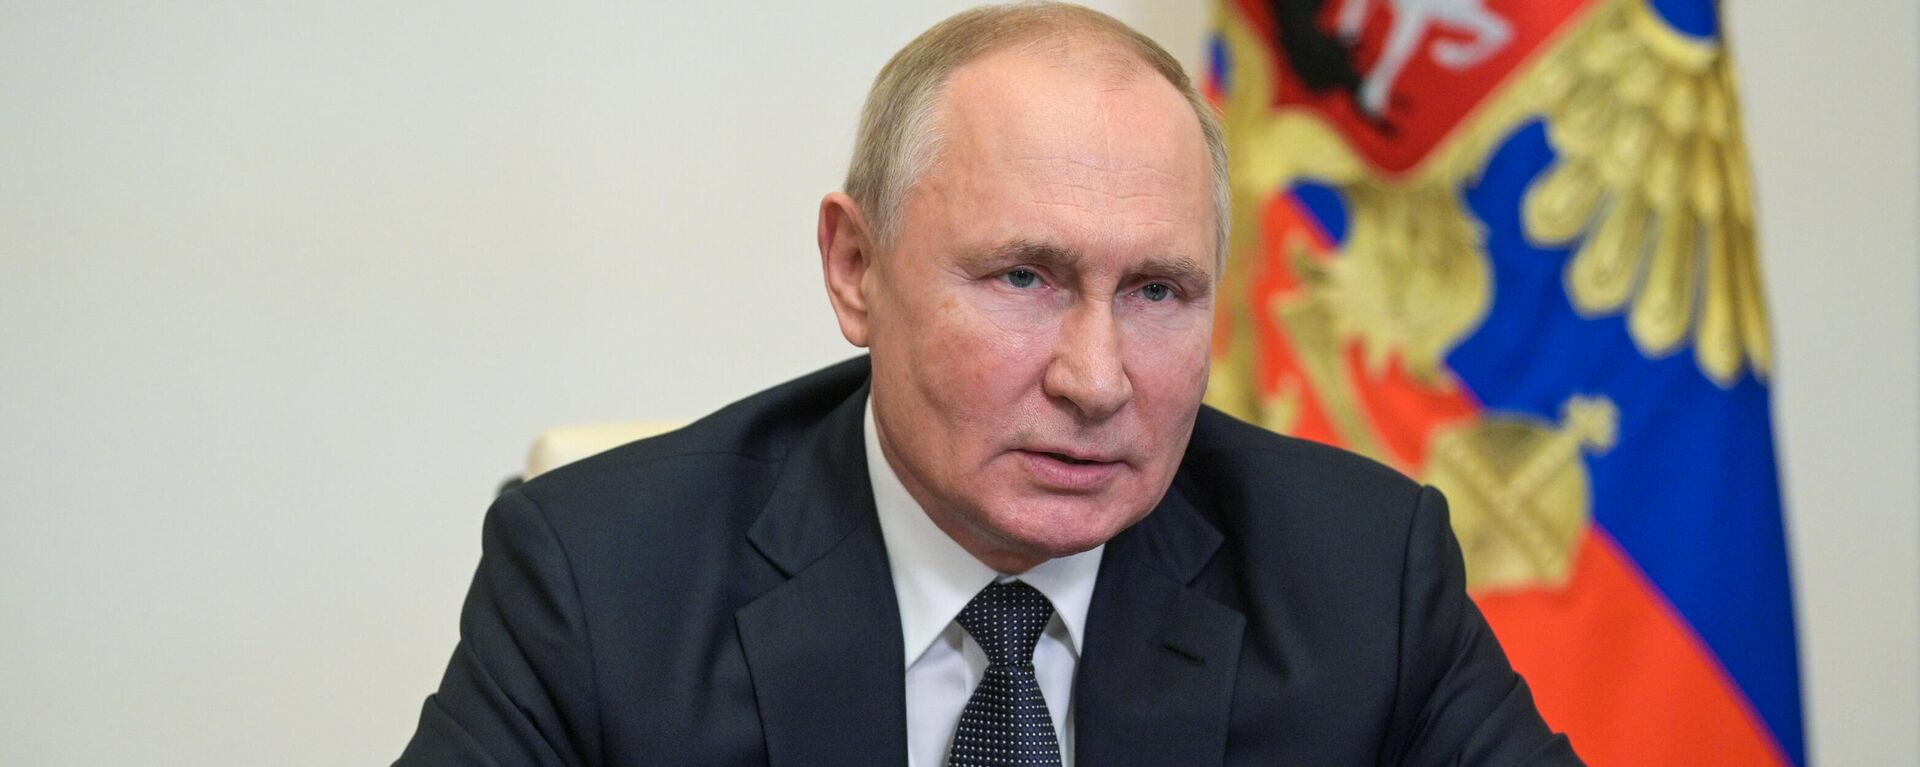 Vladímir Putin,  presidente de Rusia  - Sputnik Mundo, 1920, 20.10.2021